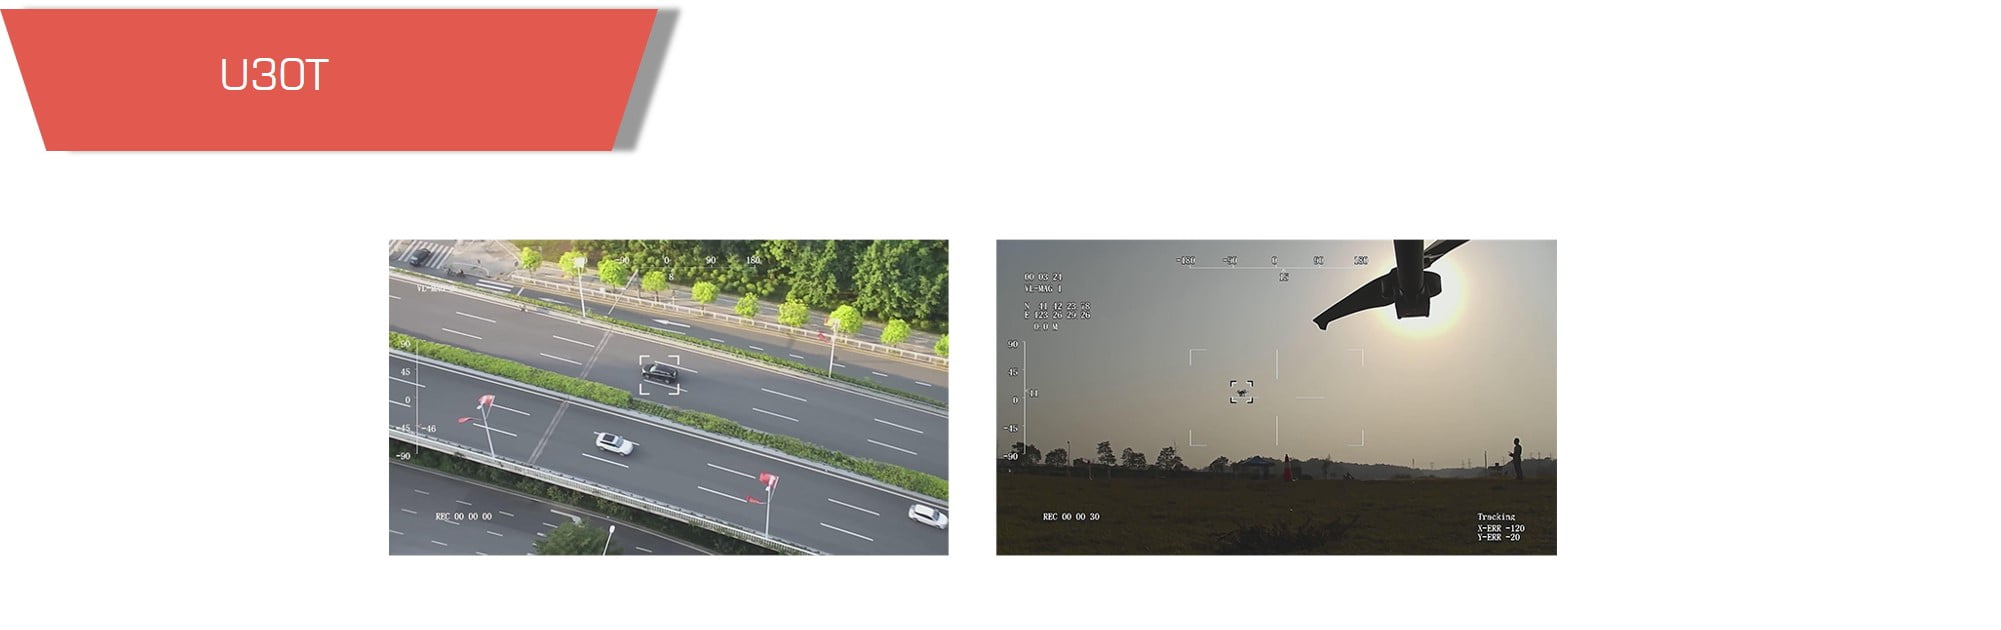 U30t - gimbal camera u30t,u30t,30x zoom,30x zoom gimbal,pan,pan tilt gimbal,gimbal camera drones,ptz camera drone - motionew - 6